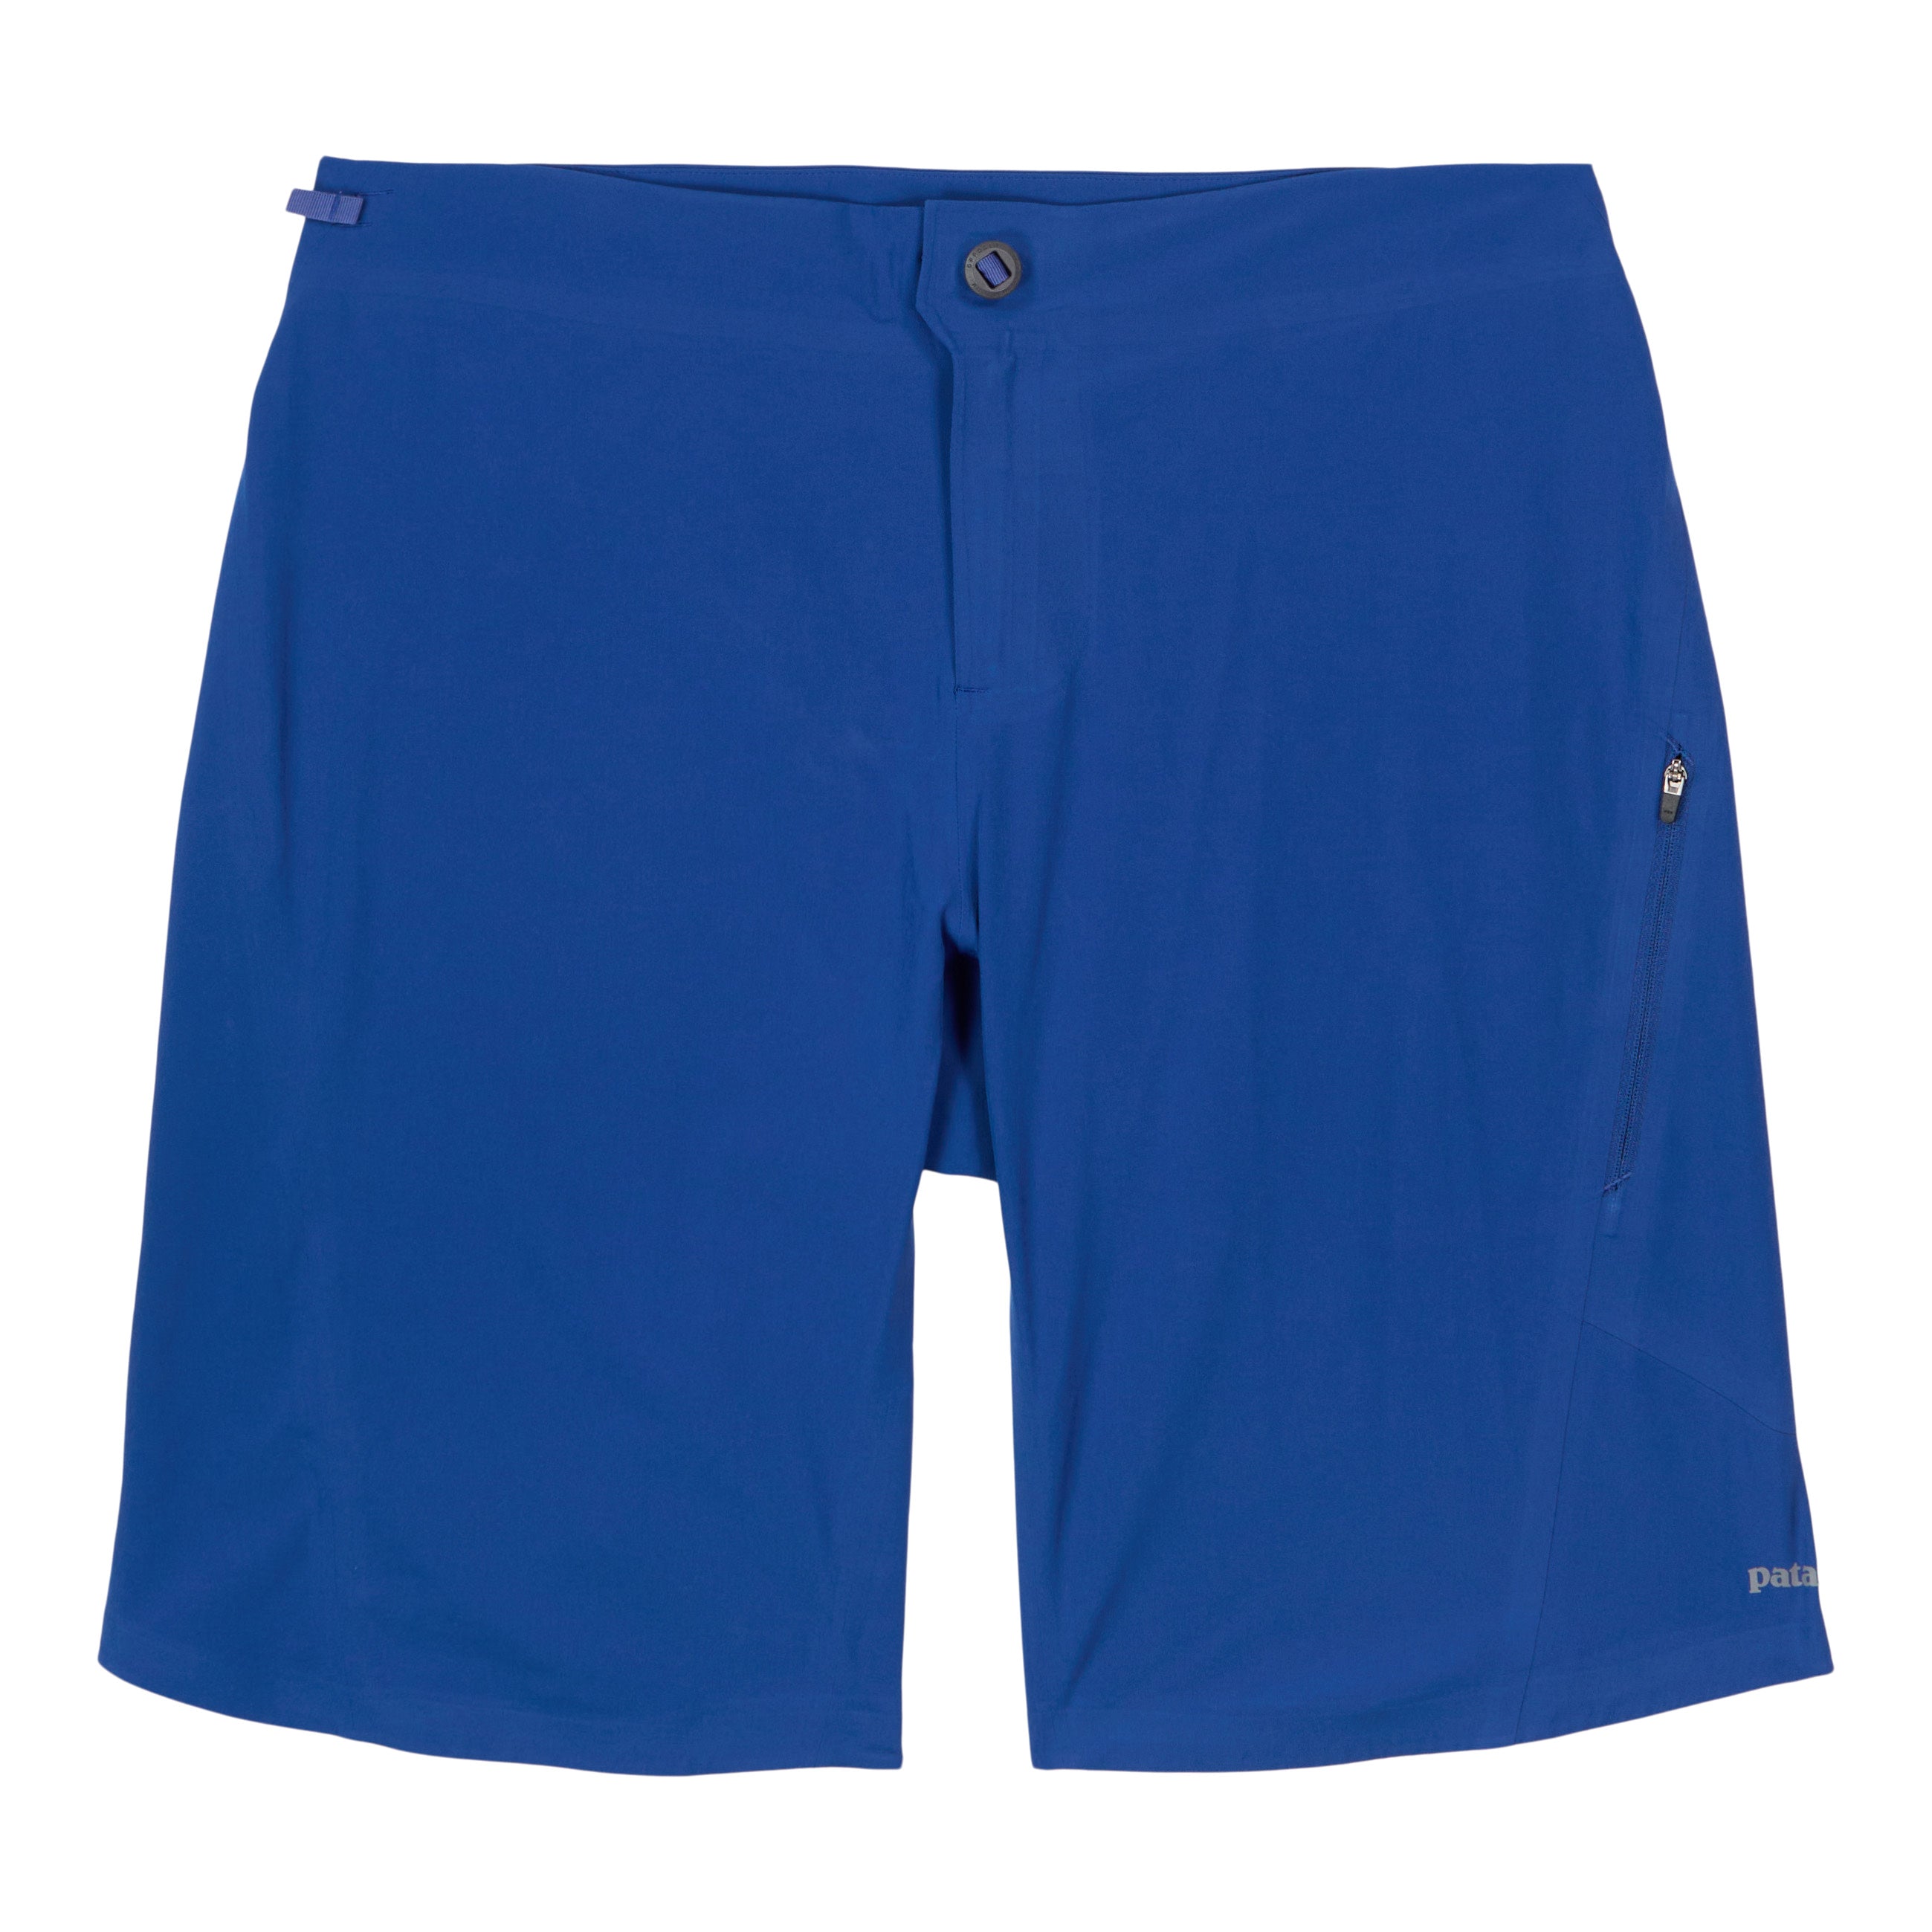 Cruiser Cycling Shorts - Ocean Blue